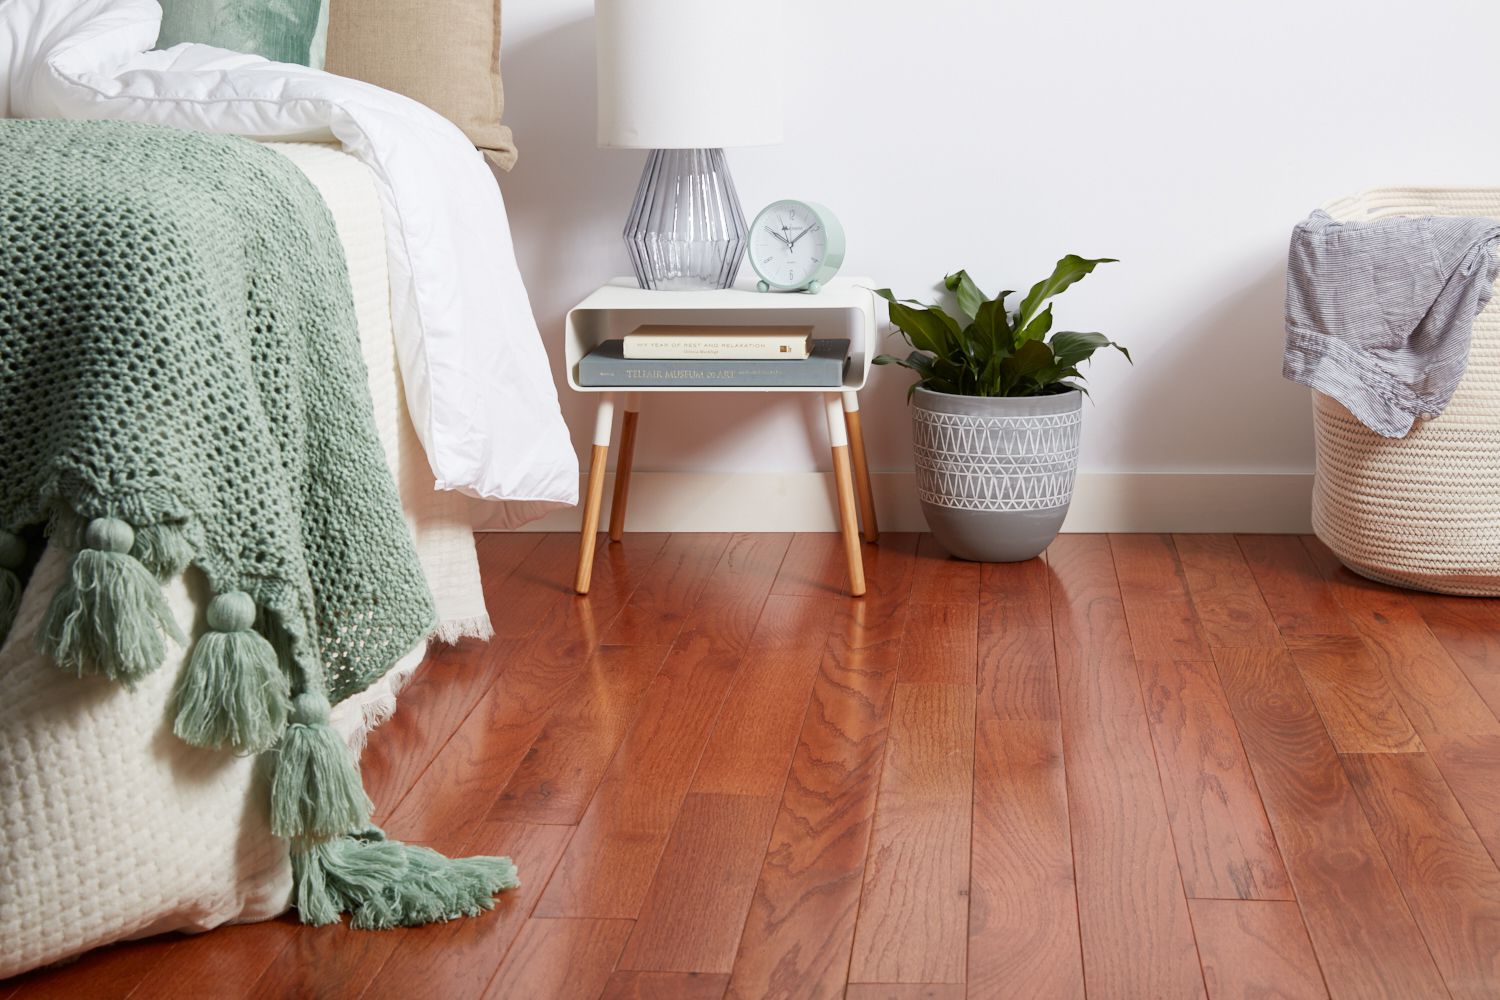 Benefits Of Installing Oak Flooring In Your Home